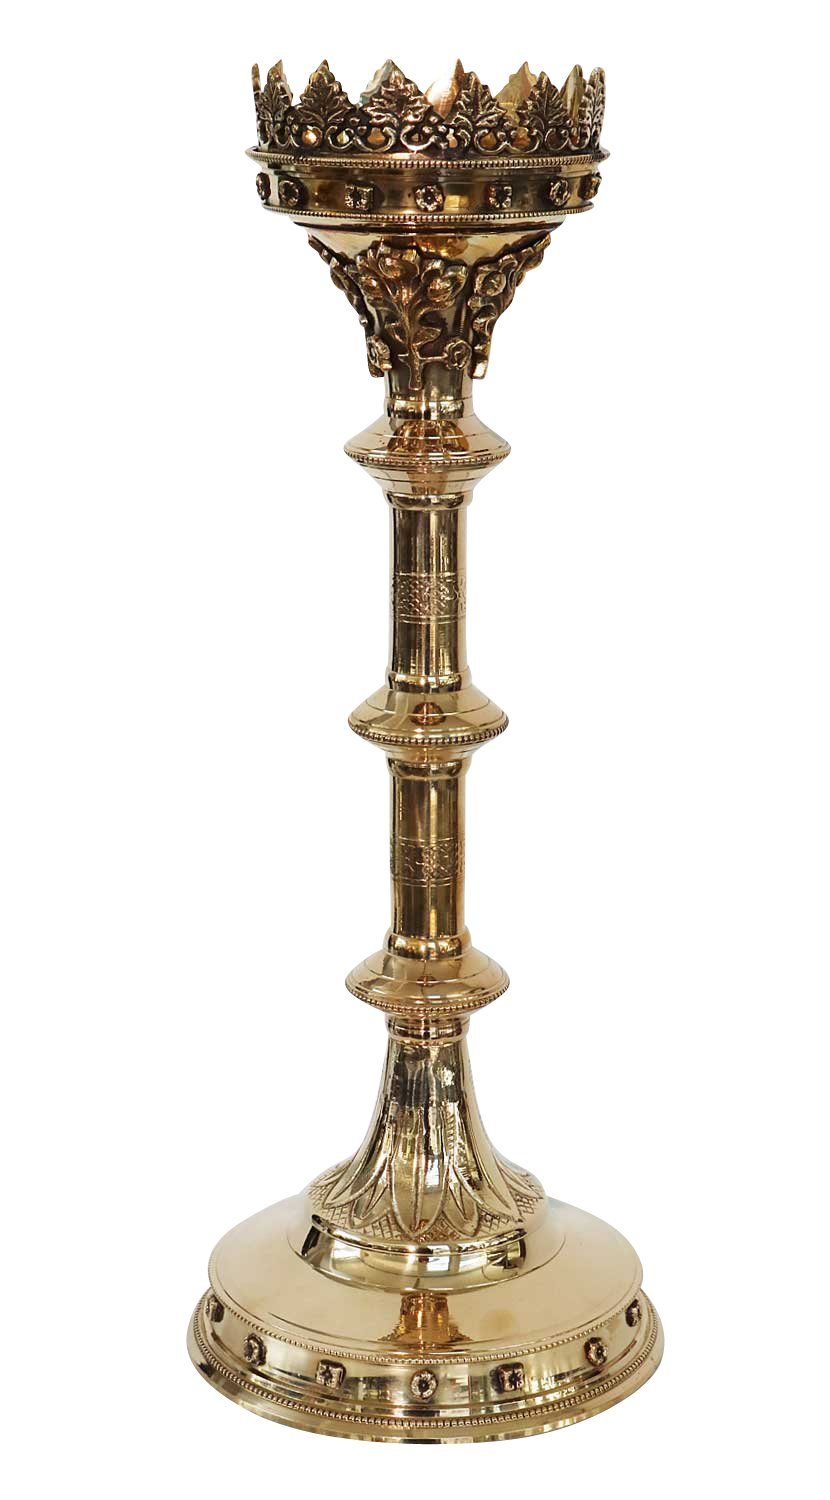 Aubaho Kerzenständer Kerzenleuchter 47cm Leuchter Altarleuchter Kerzenständer Antik-Stil go